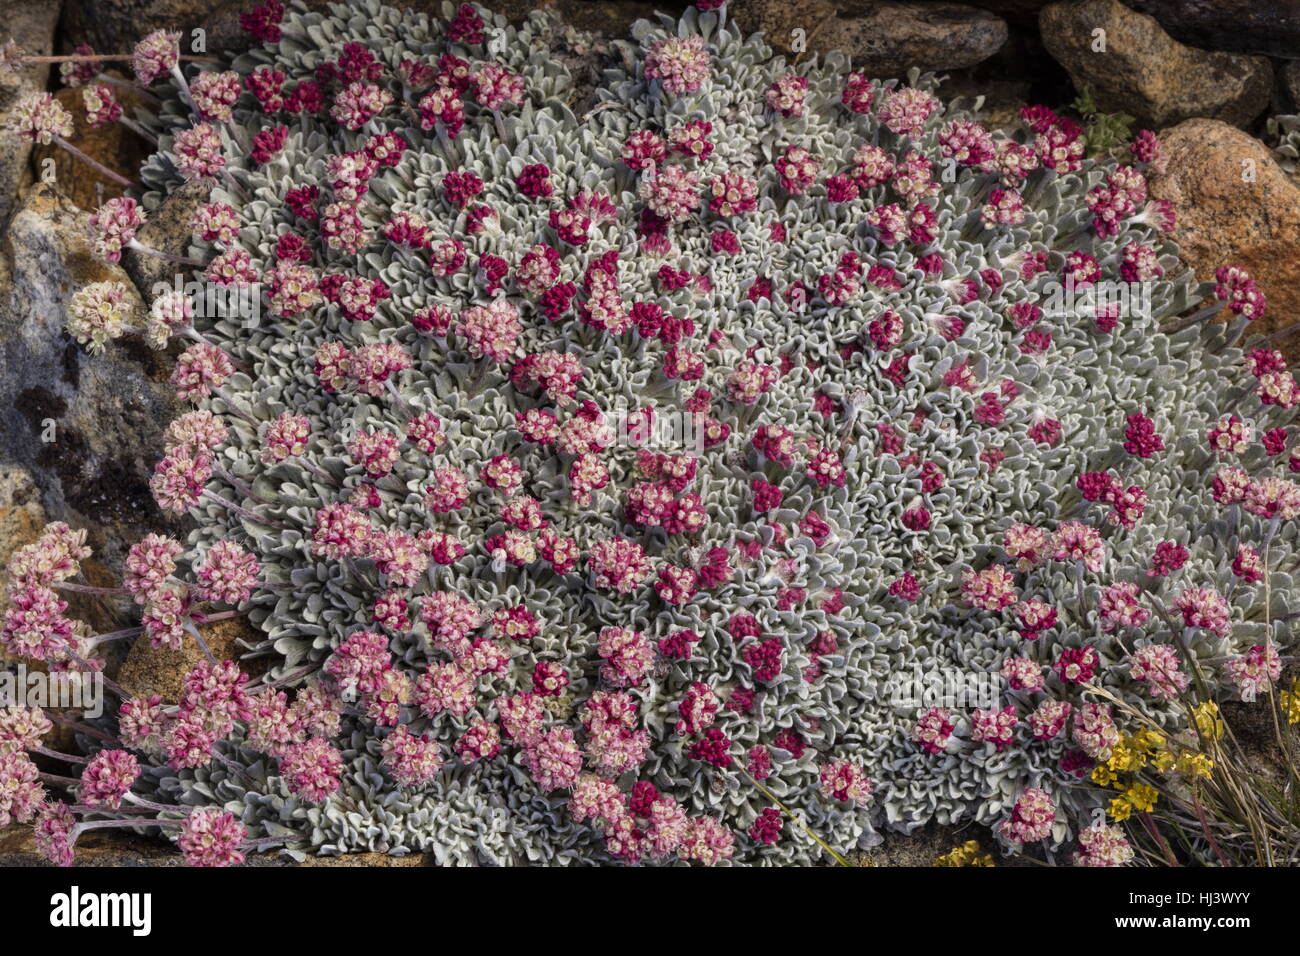 Bella densi ciuffi di alta altitudine cuscino di grano saraceno, ovalifolium Eriogonum var. nivale, Yosemite, Sierra Nevada. Foto Stock